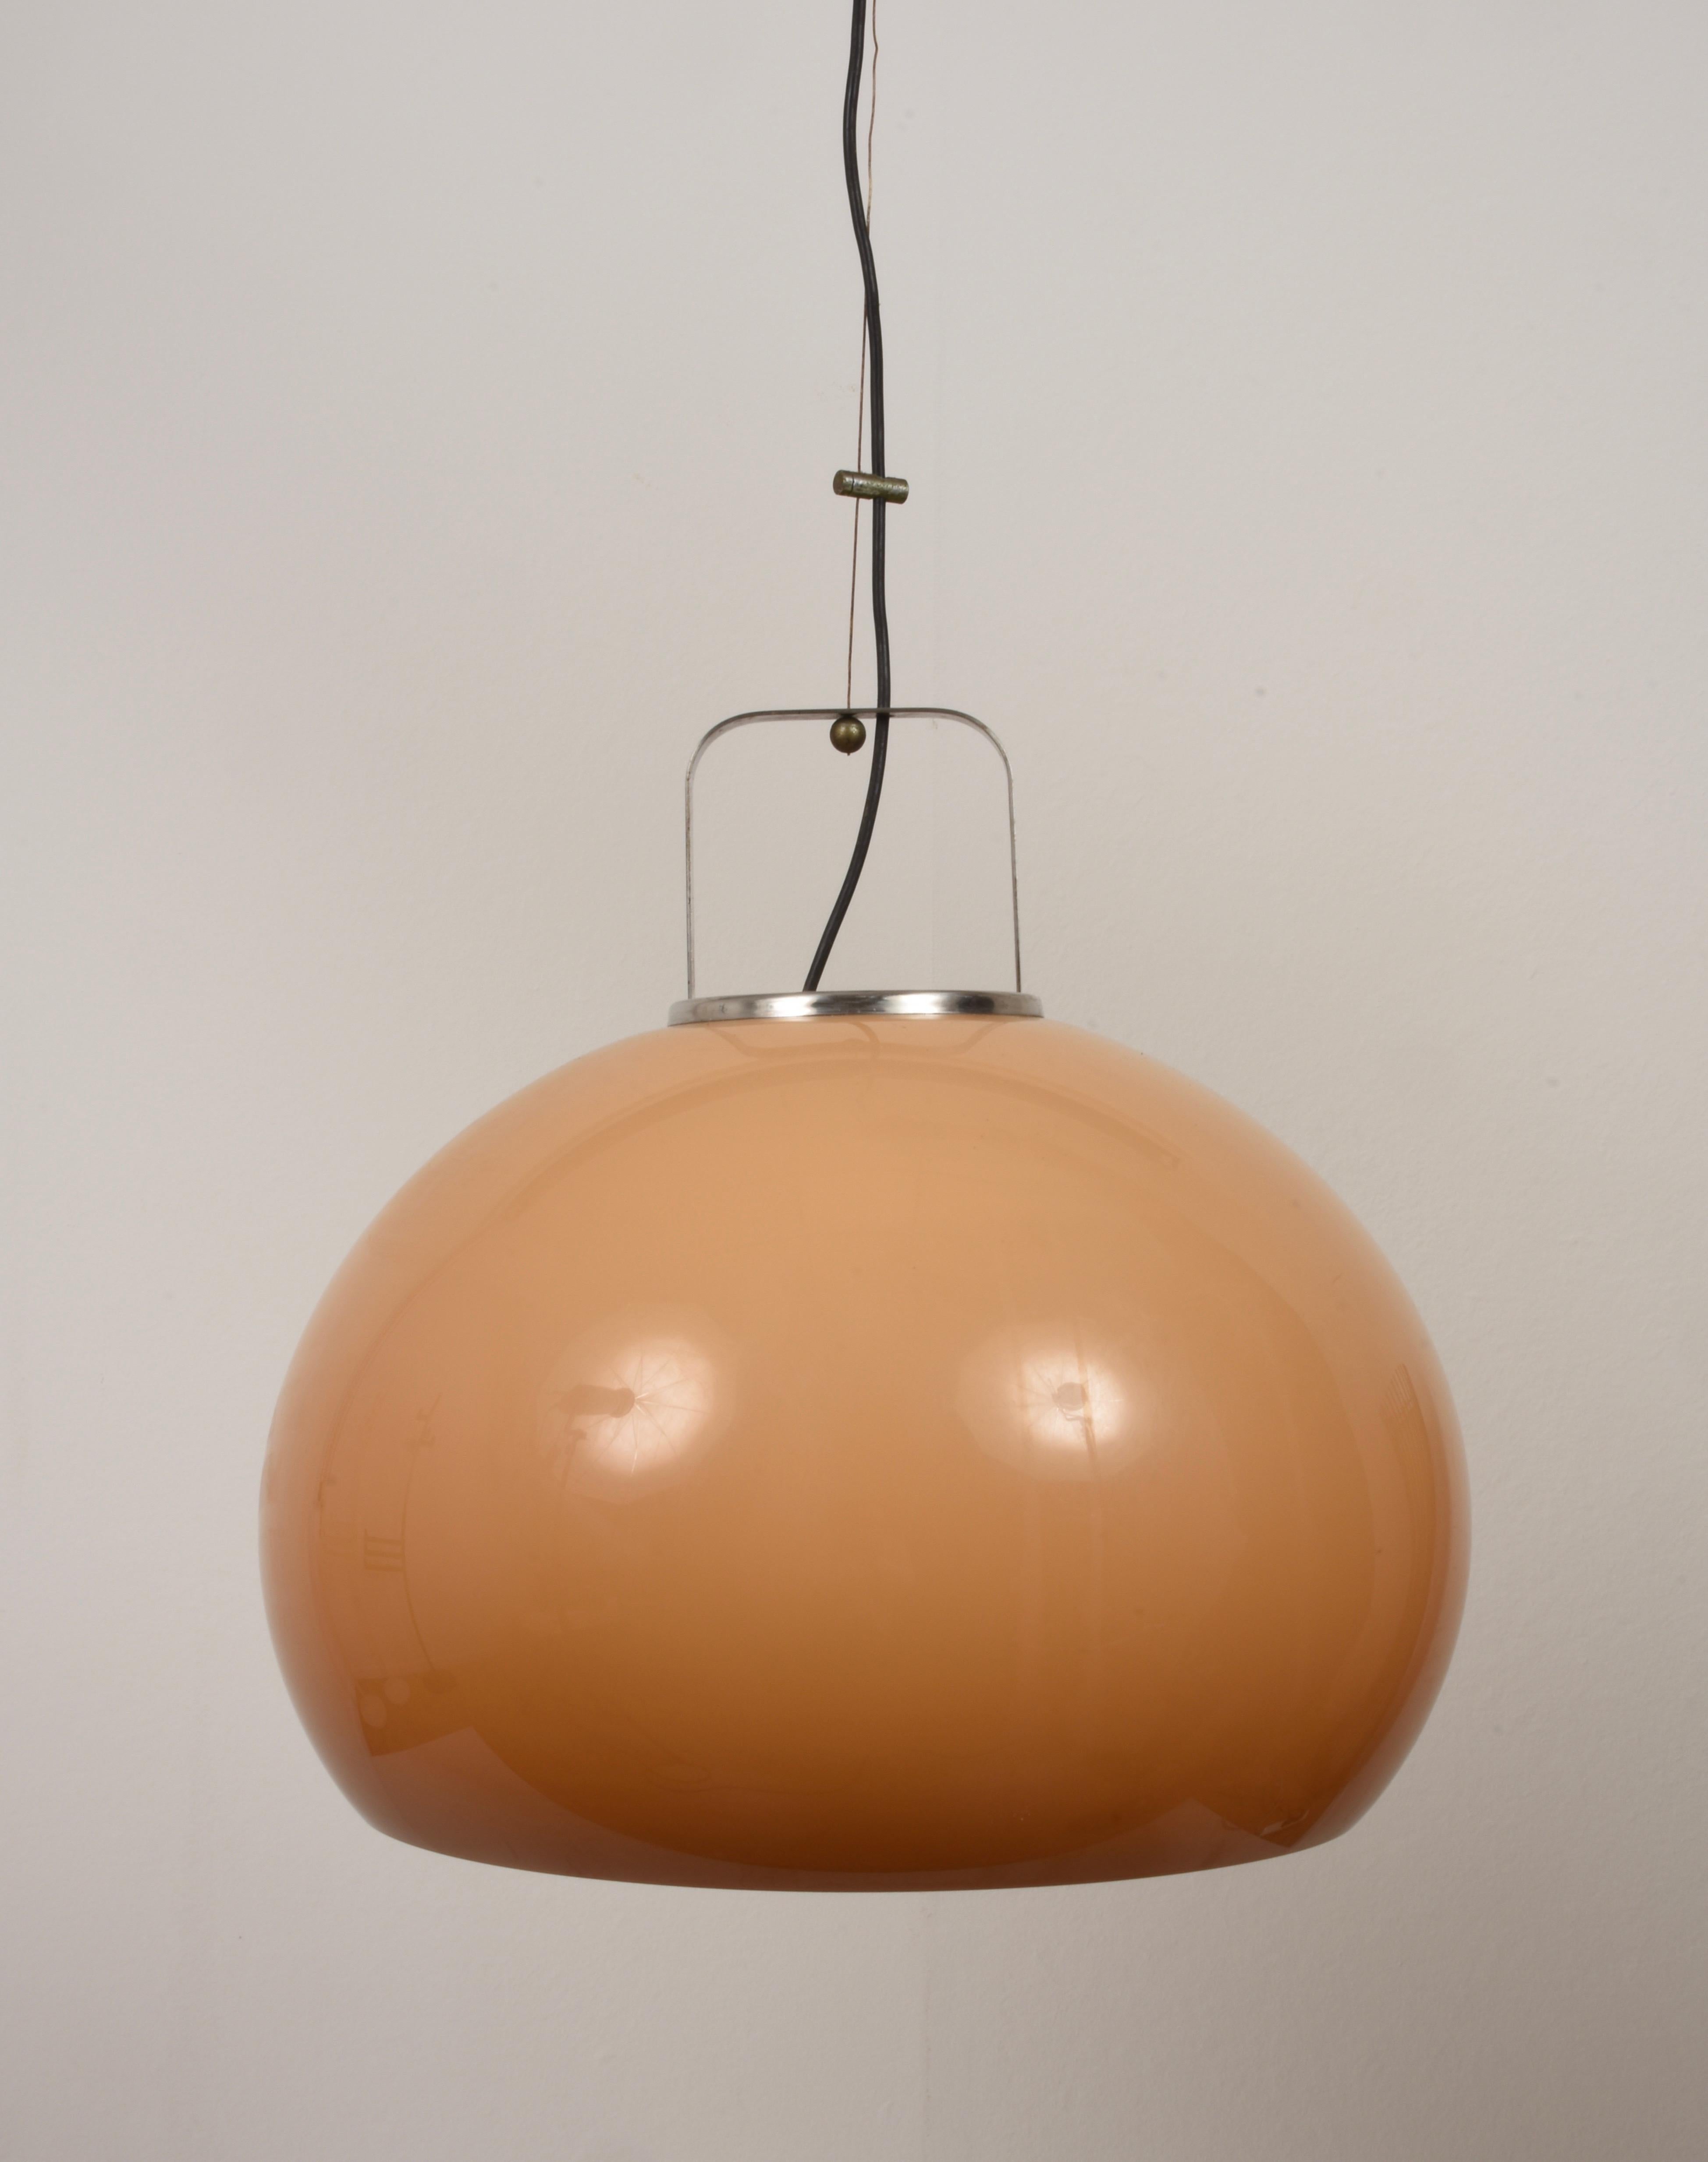 Chandelier in Perspex by Guzzini, Italy, 1970s, Italian lighting, pendant, lamp.